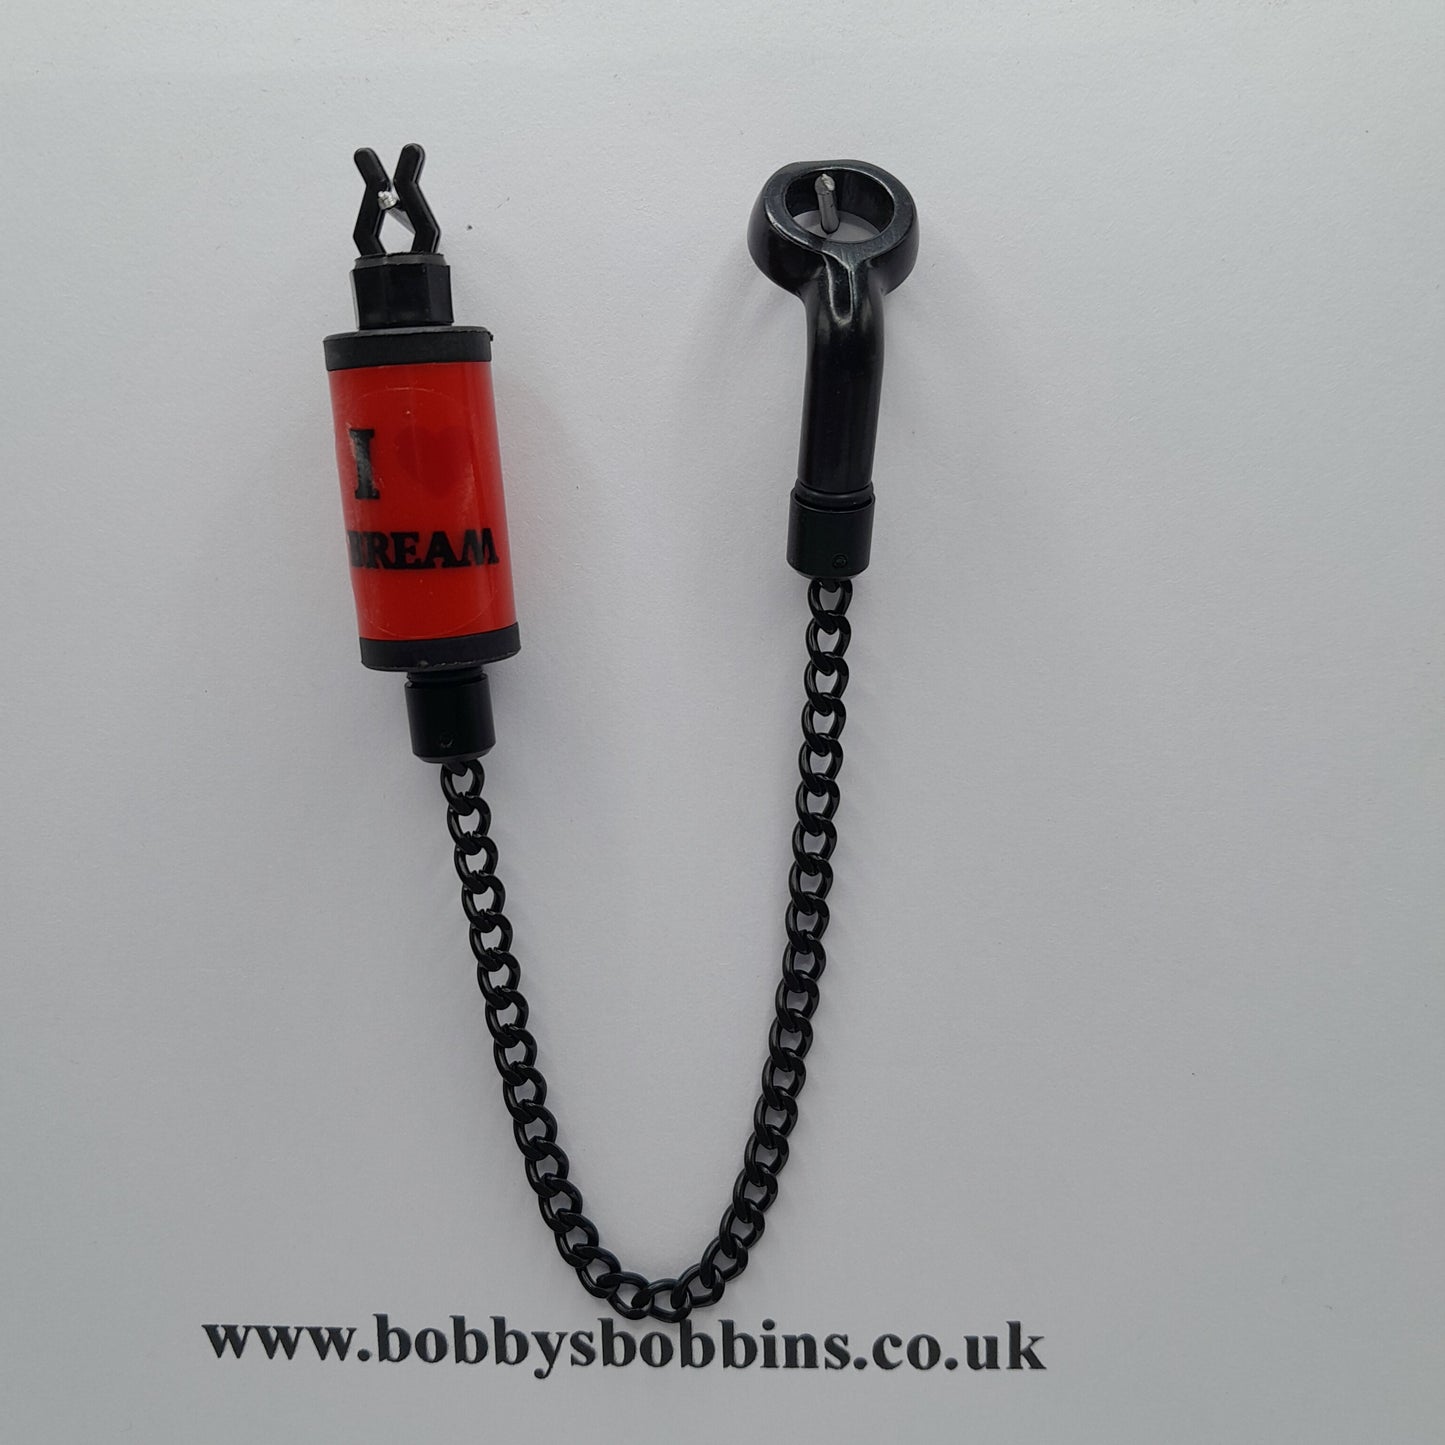 Bobby's Bobbins - Custom Fishing Bite Indicators and Tackle UK